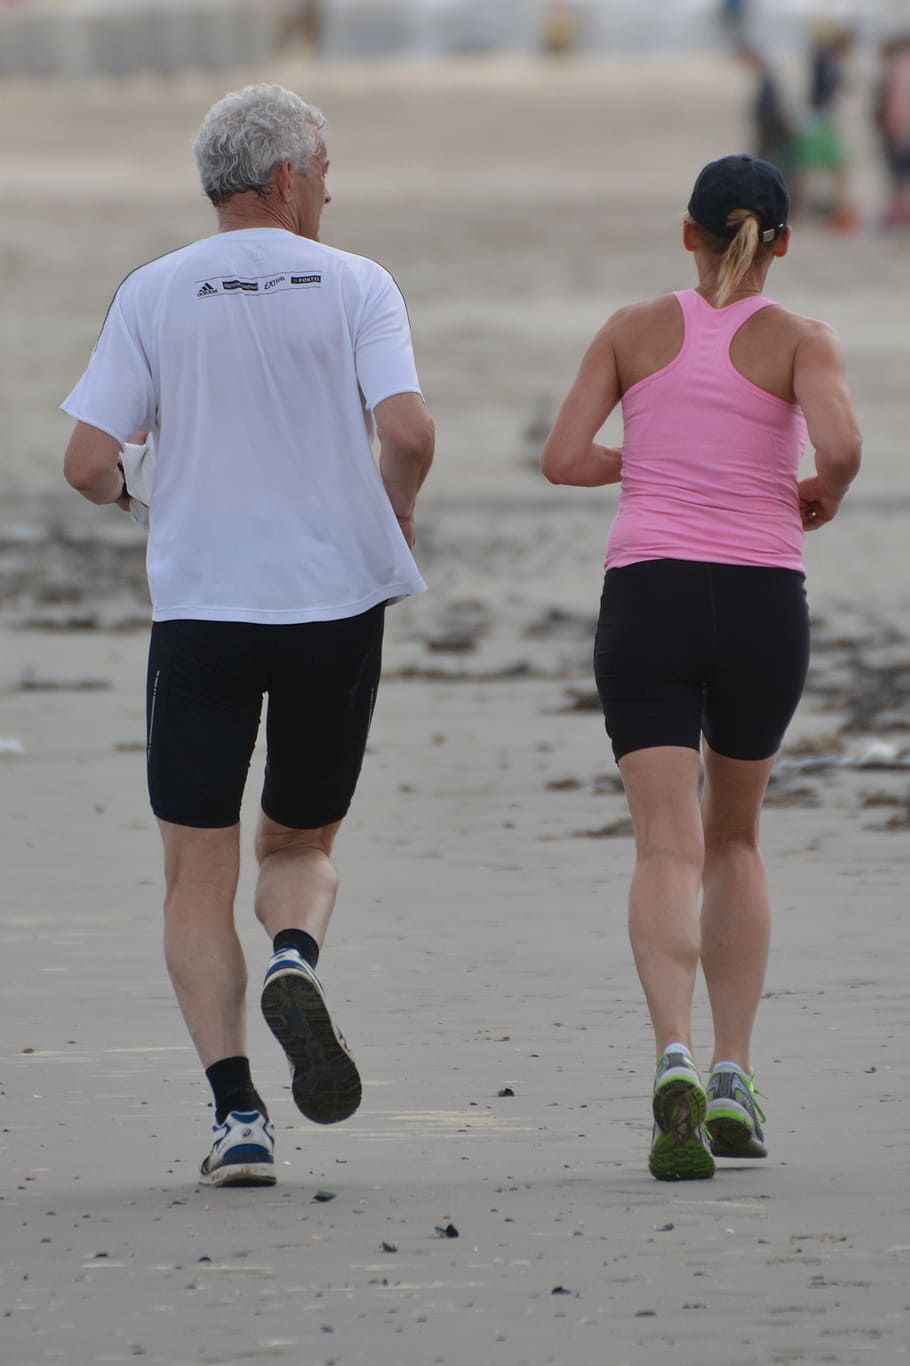 man in white top jogging beside woman in pink racerback top, people